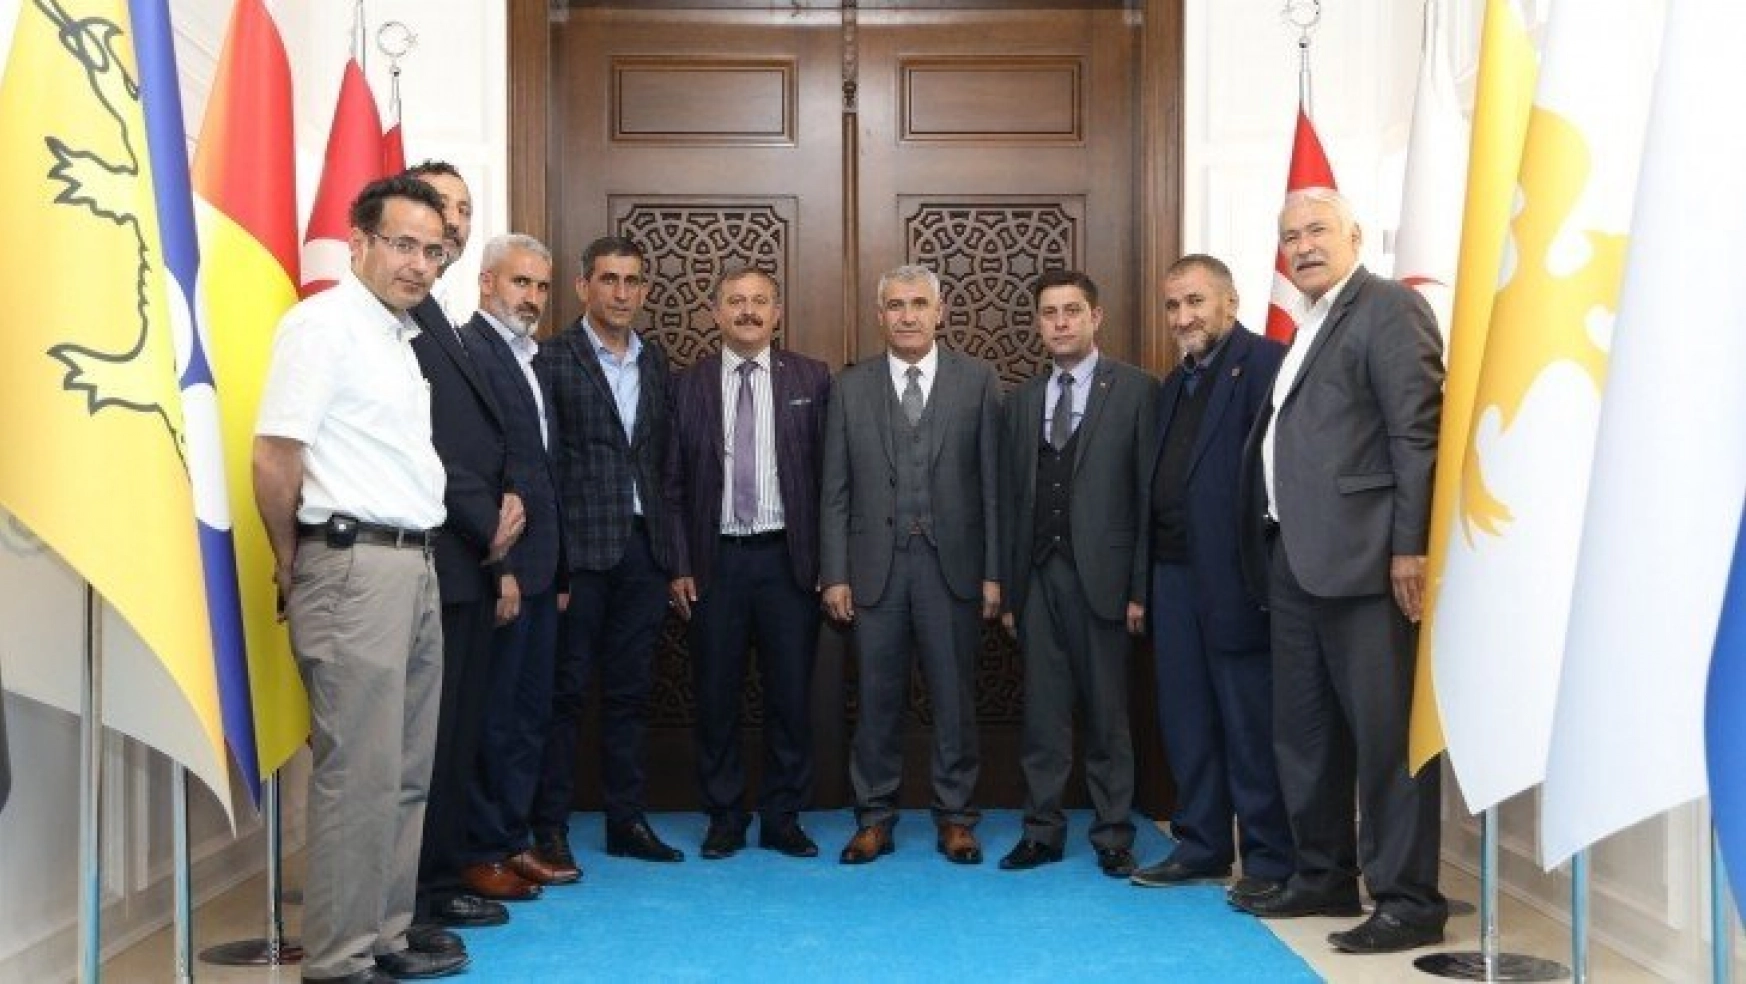 Muhtarlardan Başkan Gürkan'a ziyaret